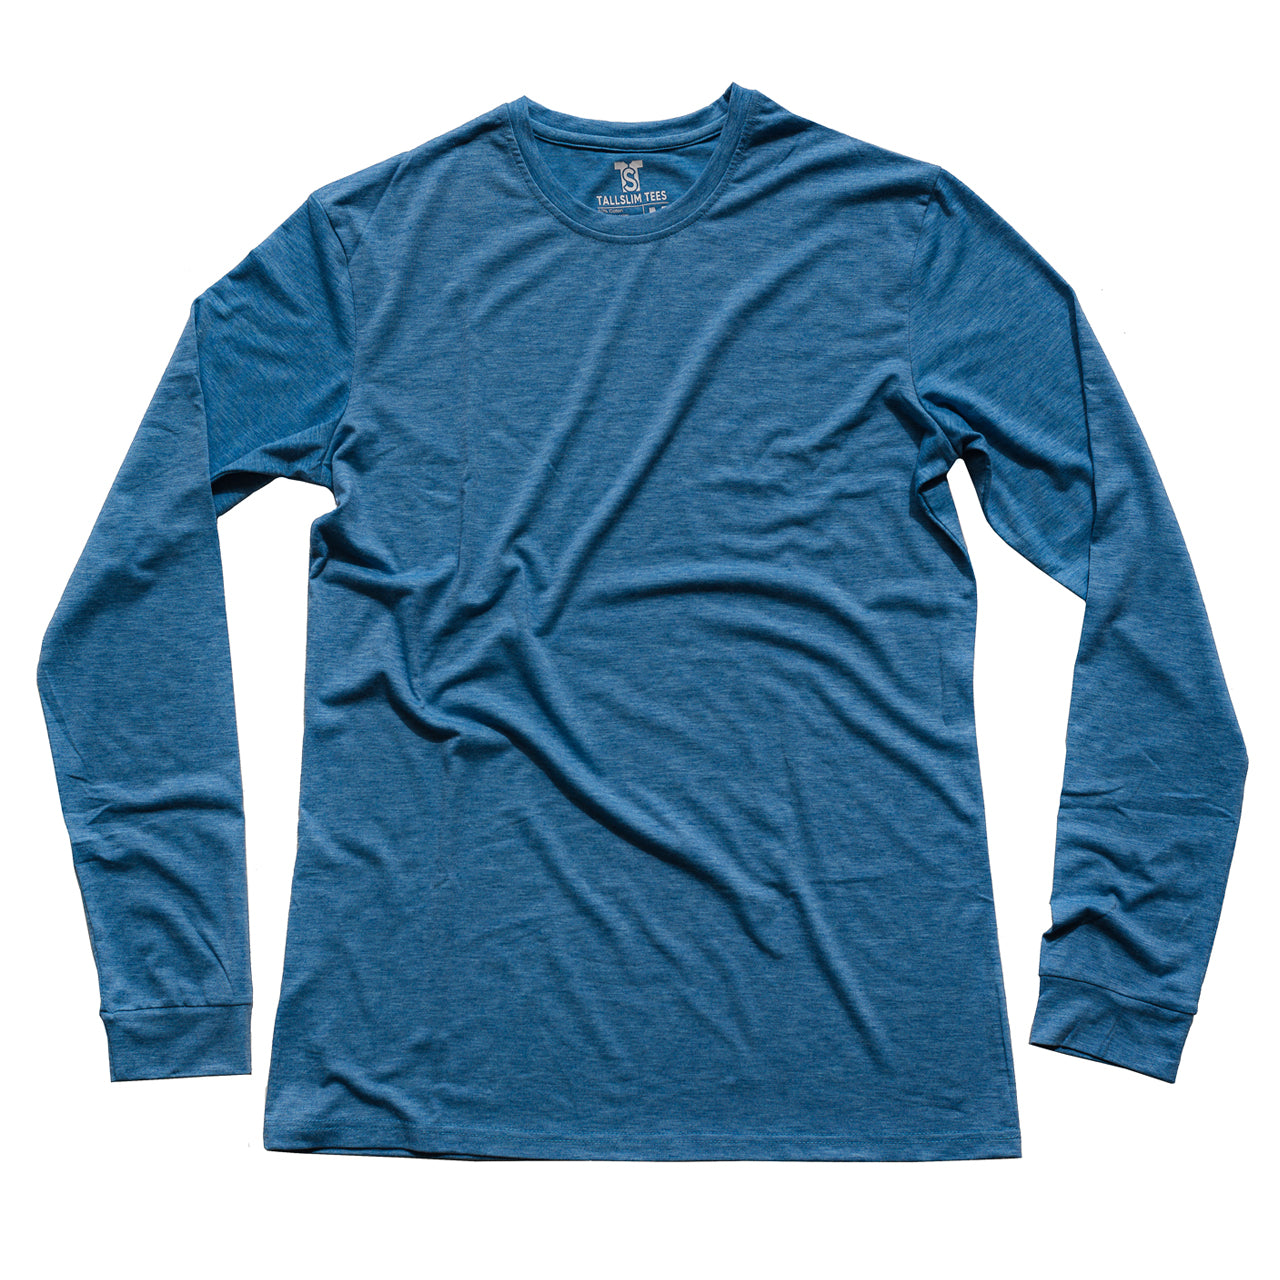 Blue Long Sleeve Crew Neck Shirt for Tall Slim Men